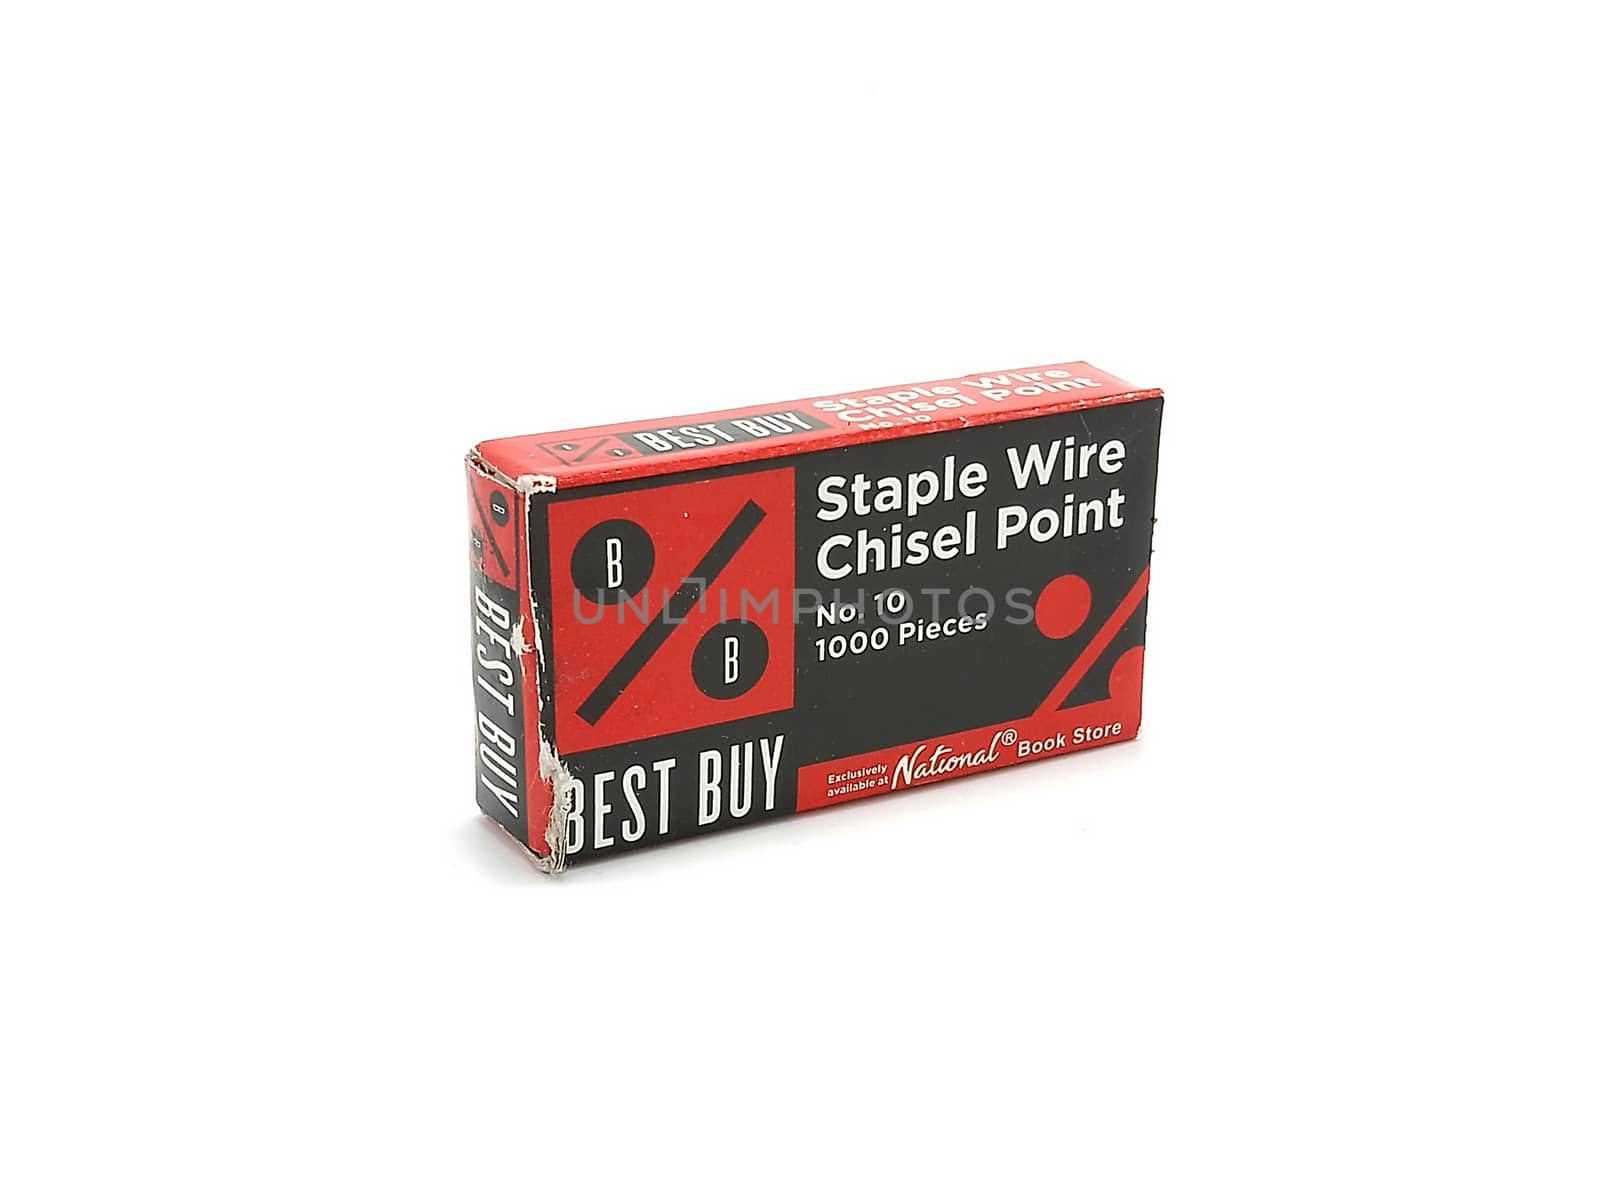 MANILA, PH - JUNE 23 - Best buy staple wire chisel point on June 23, 2020 in Manila, Philippines.